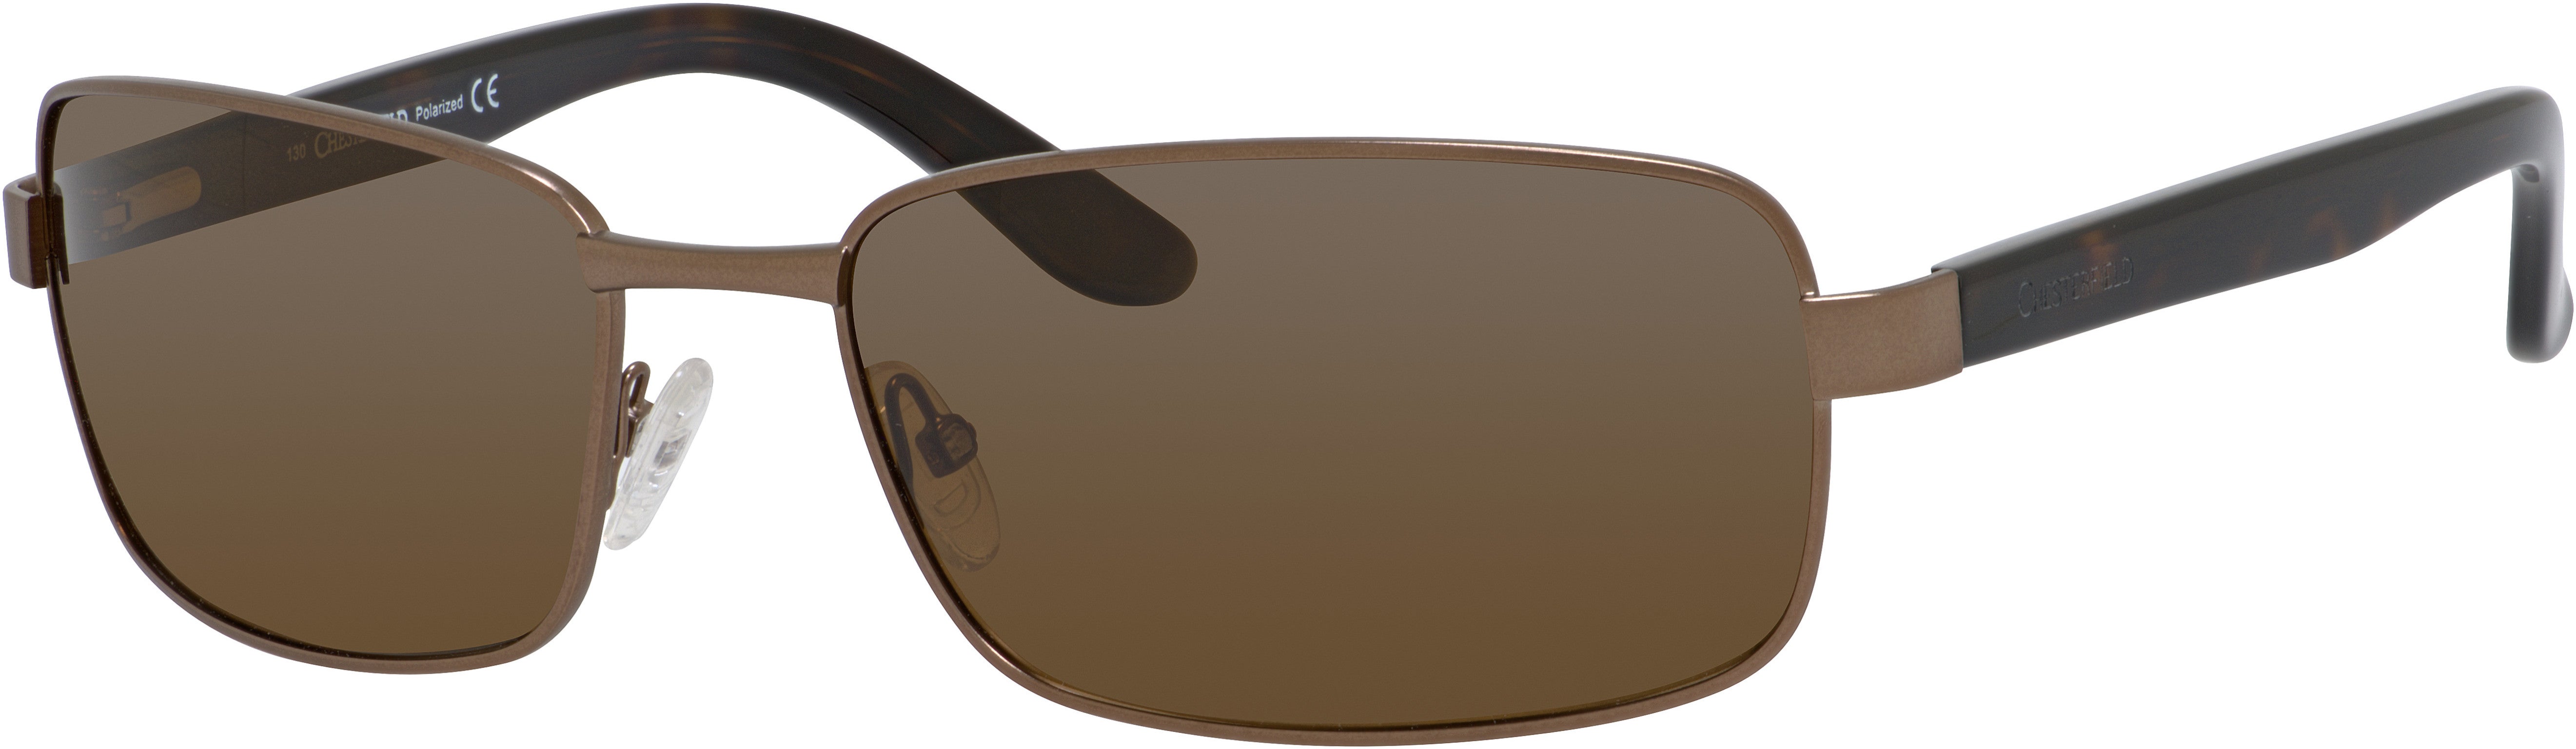 Chesterfield Collie/S Rectangular Sunglasses DG9P-DG9P  Bronze (VW Dark Brown Pz)